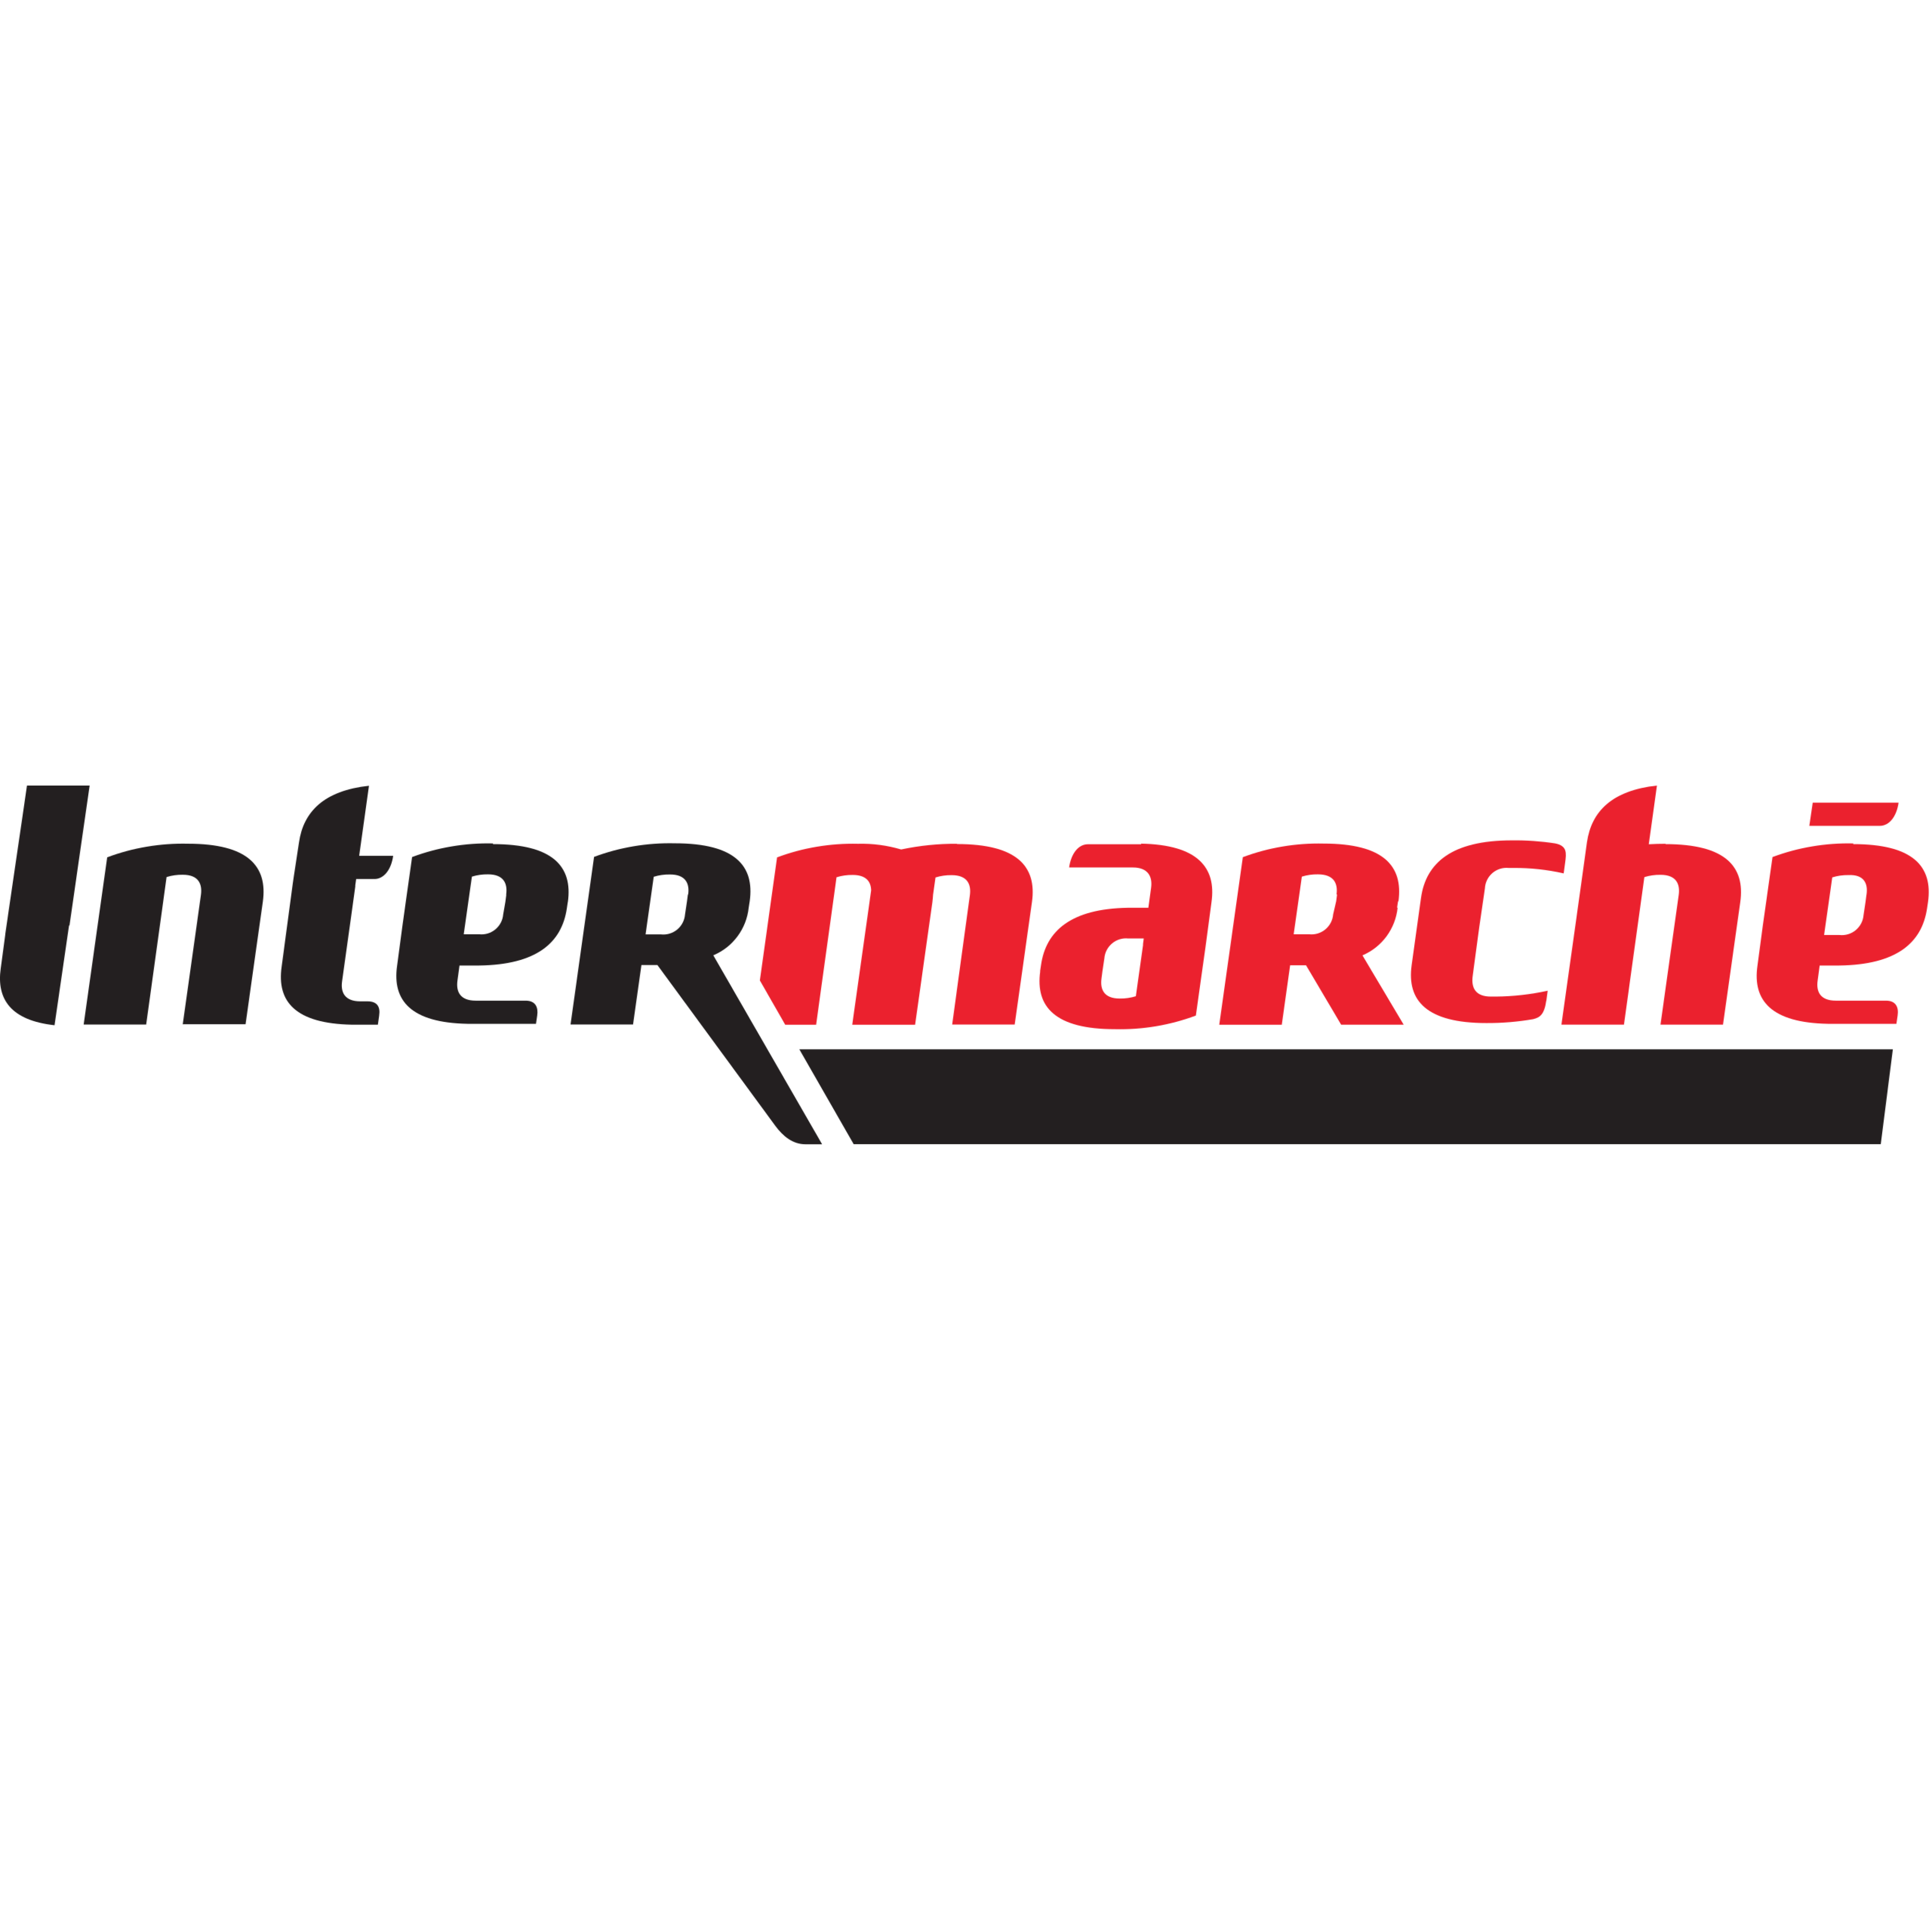 Intermarché_logo_2017.svg